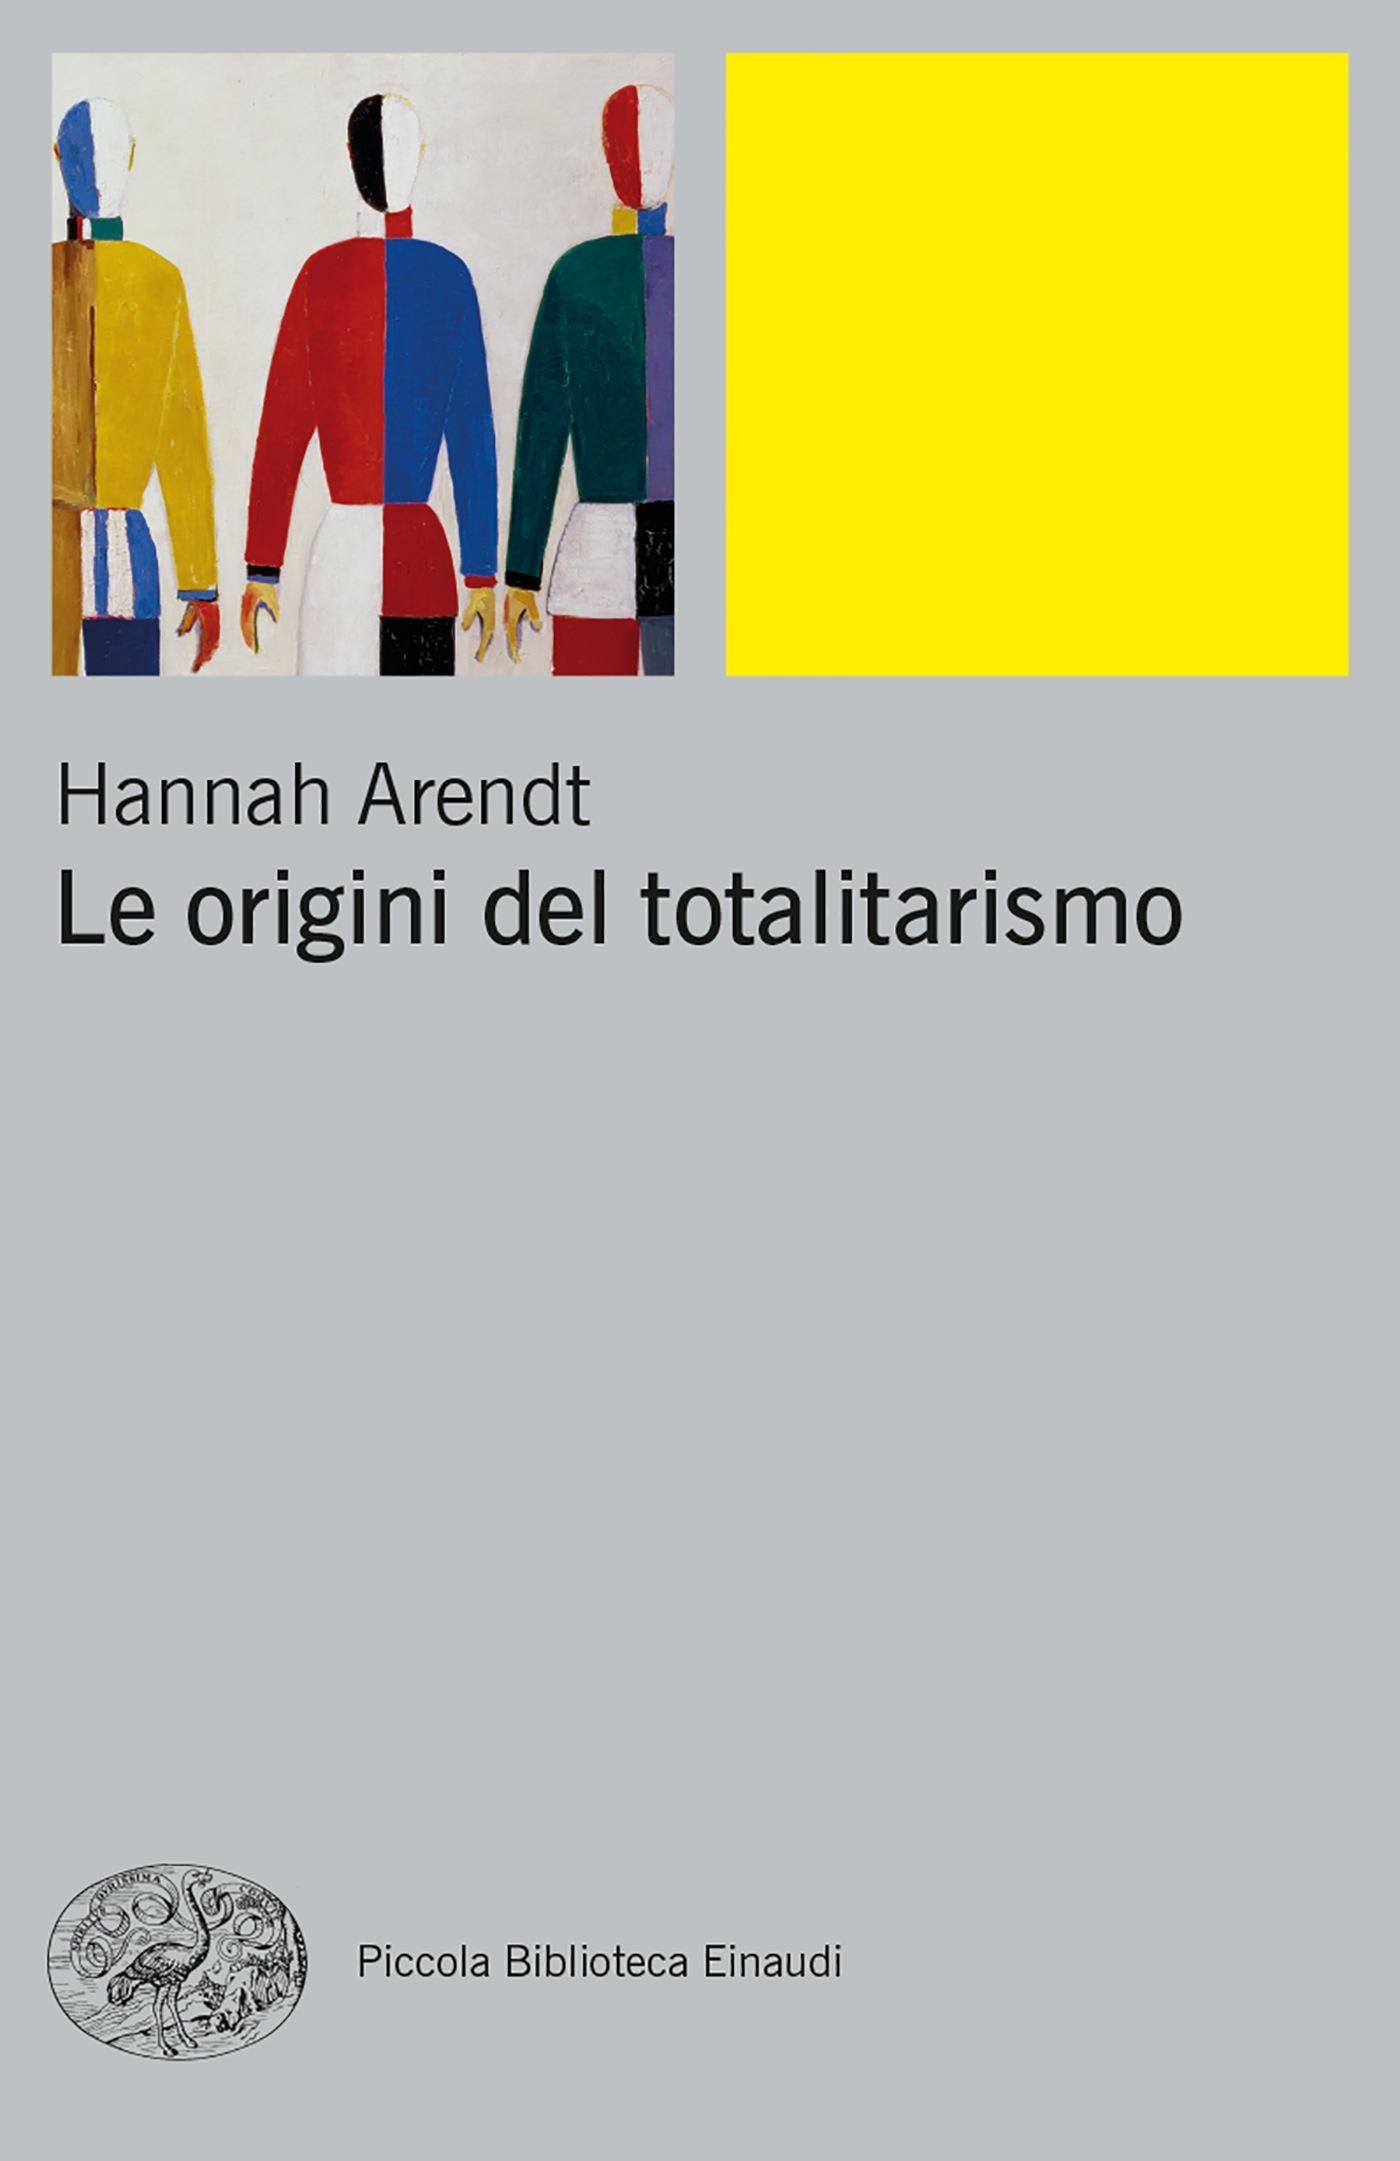 Hannah arendt le origini del totalitarismo ebook download